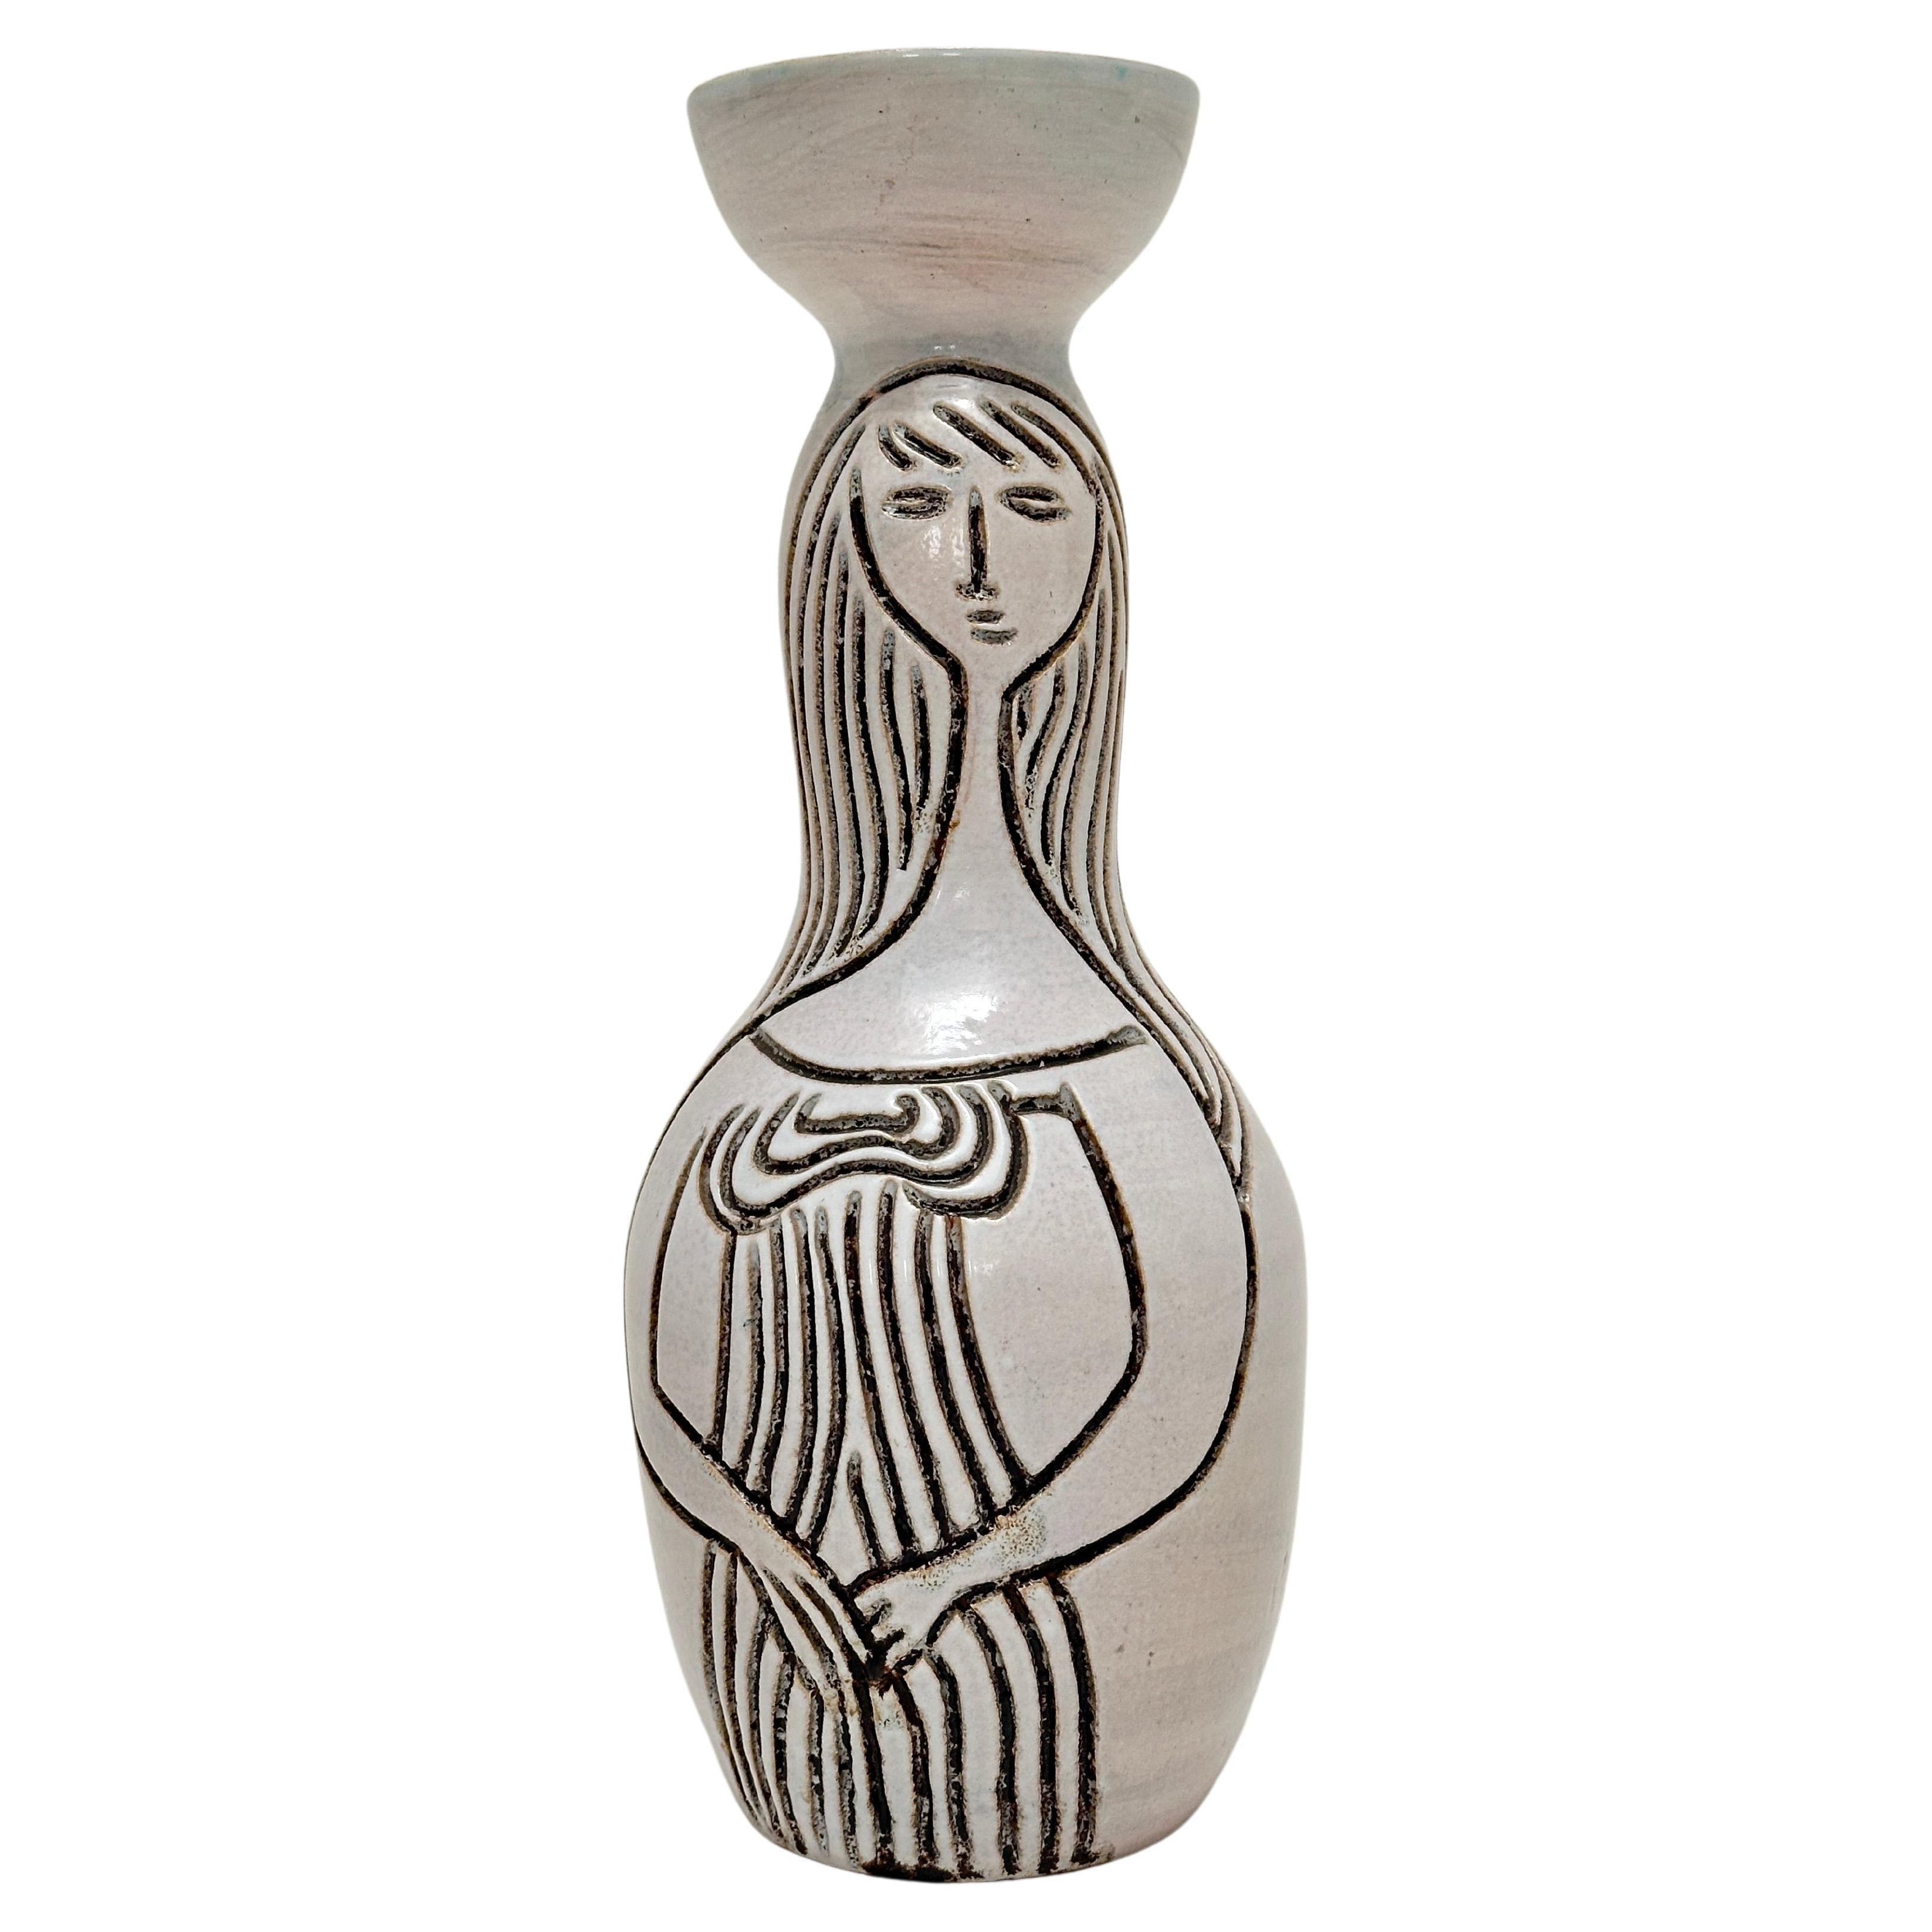 Bilobed-Vase, Akzent, Frankreich um 1960